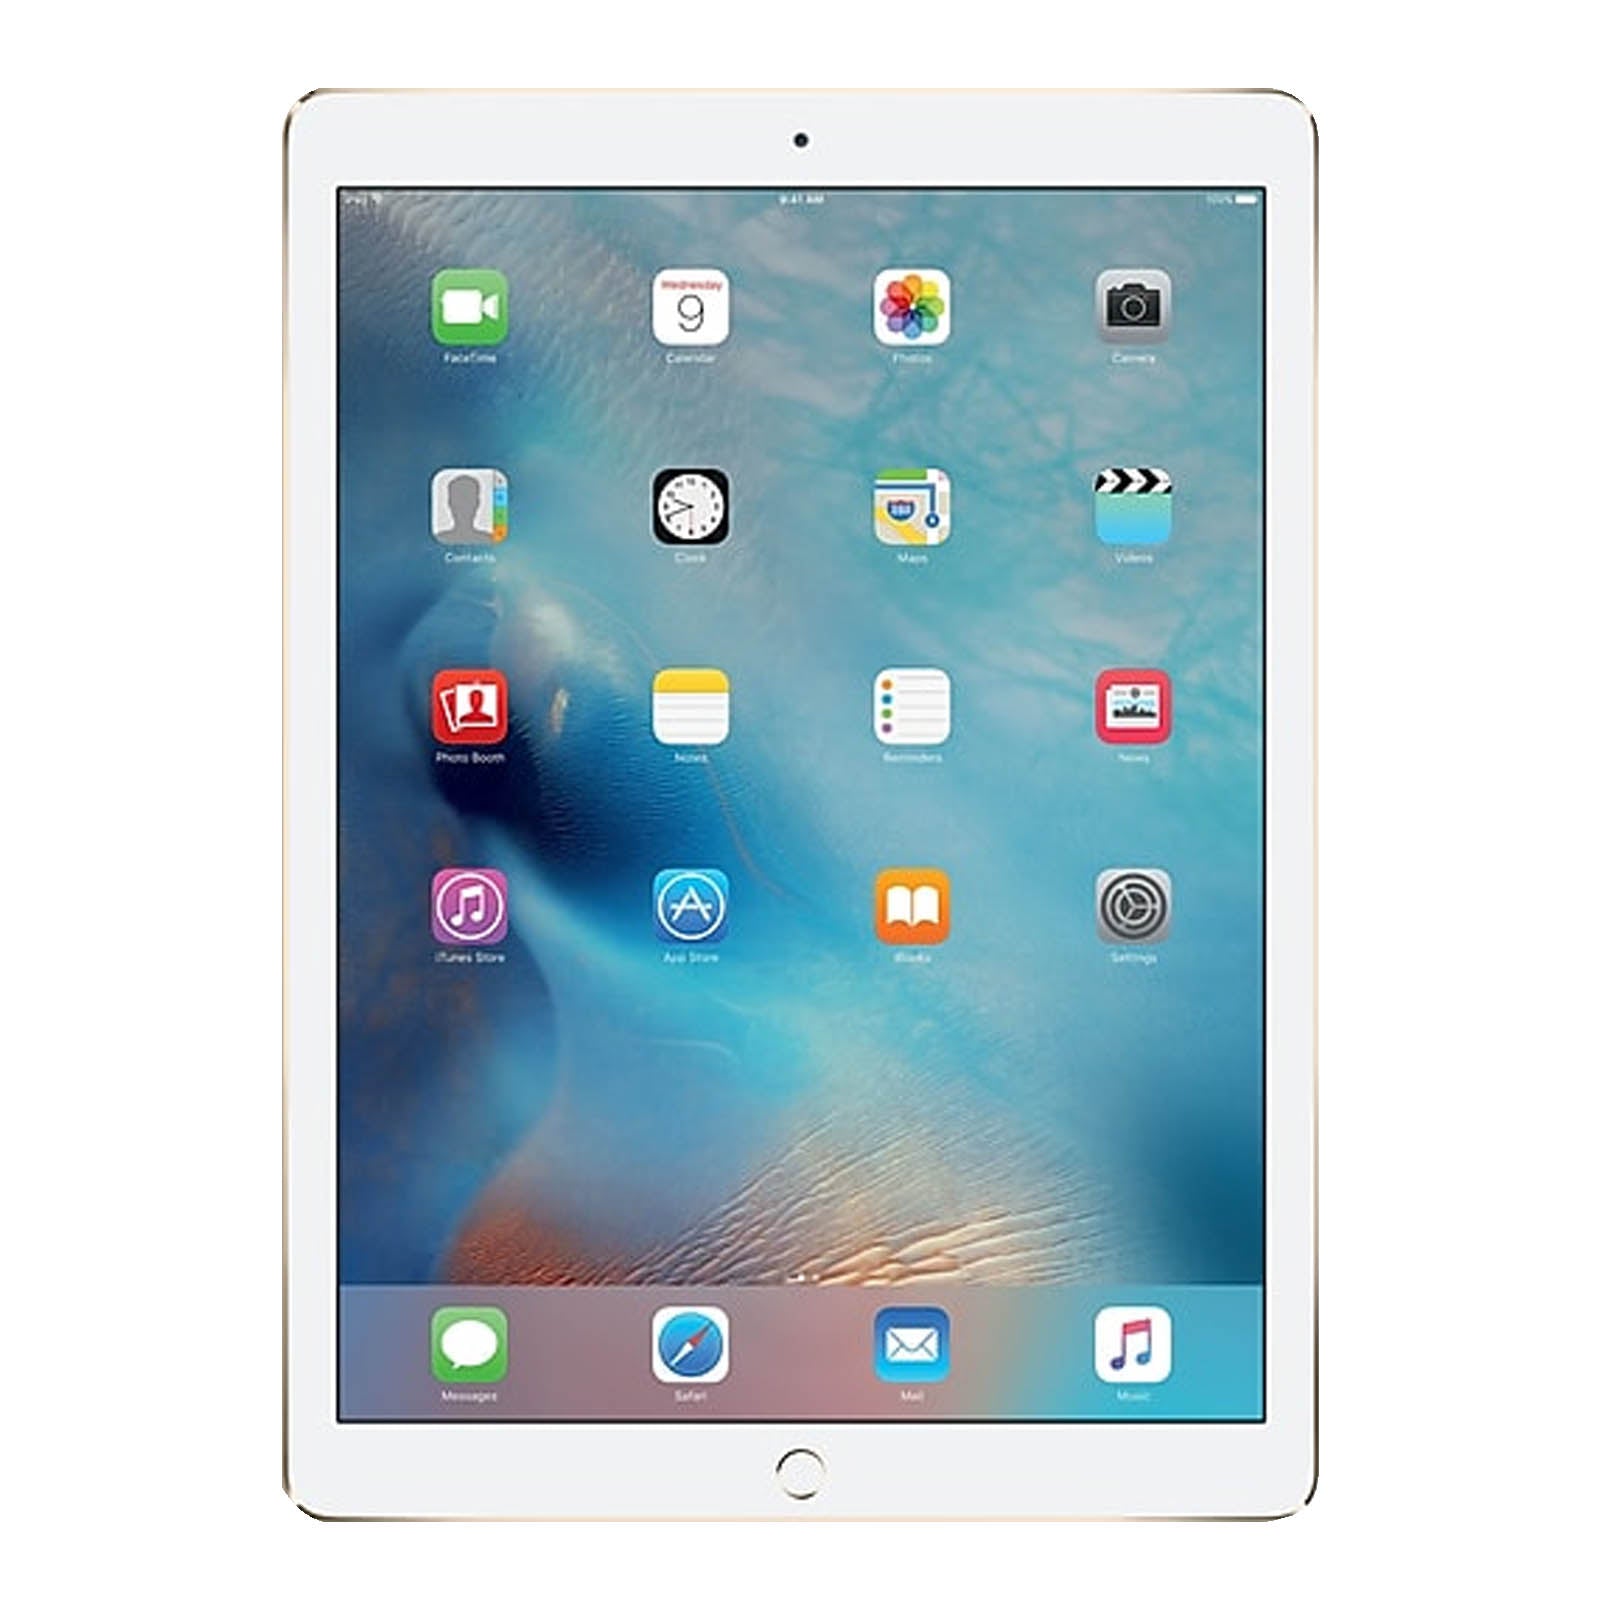 iPad Pro 12.9 Inch 2nd Gen 256GB Gold Pristine - WiFi